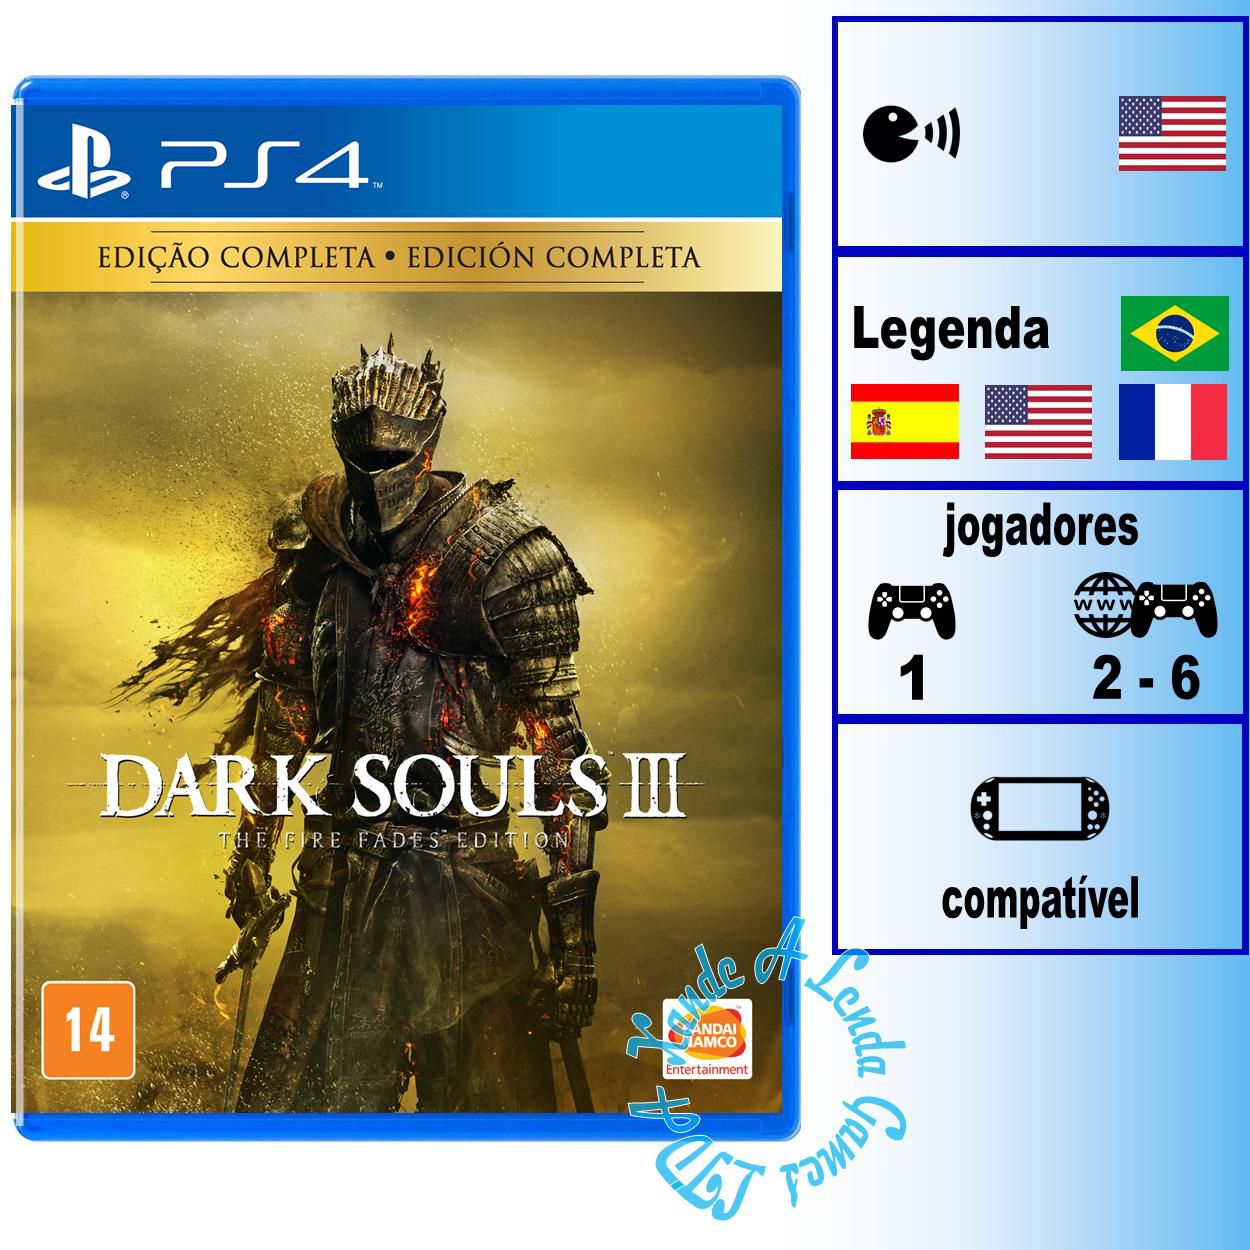 Bandai namco PS4 Dark Souls 3+The Witcher 3 Wild Hunt